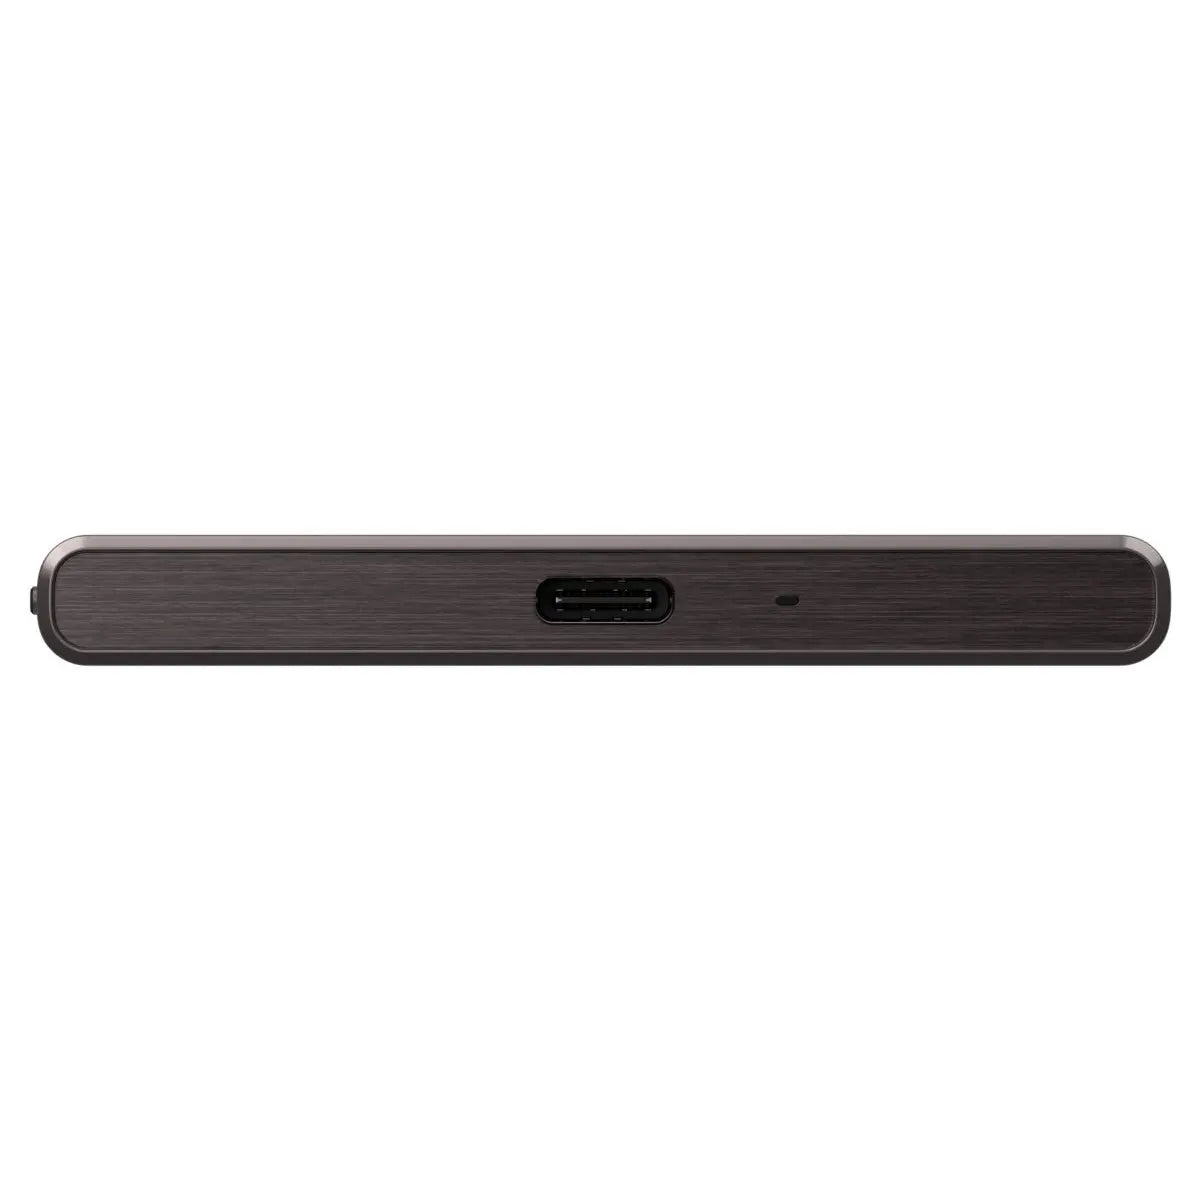 Smartphone Sony Mobile Xperia XZ couleur noir sony